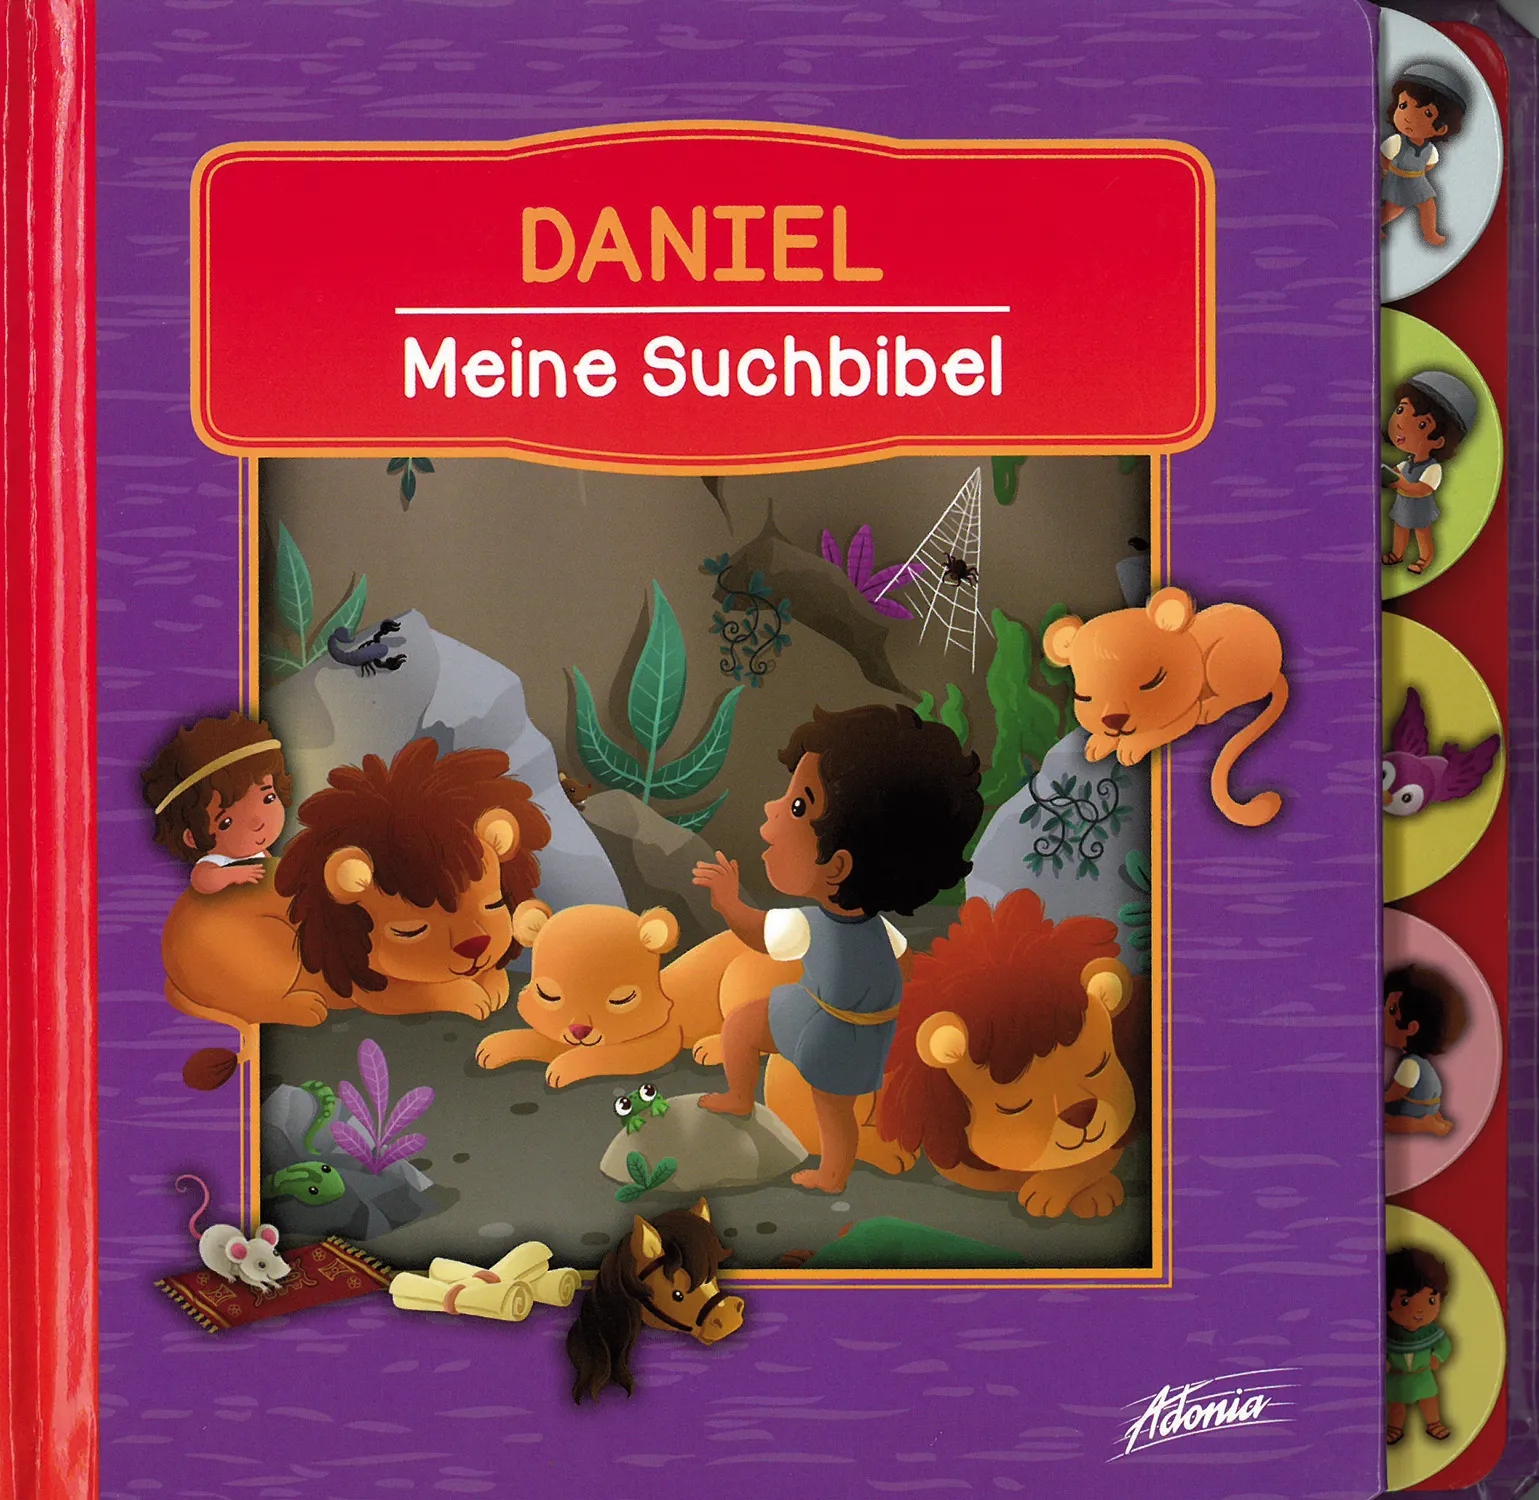 Daniel - Meine Suchbibel